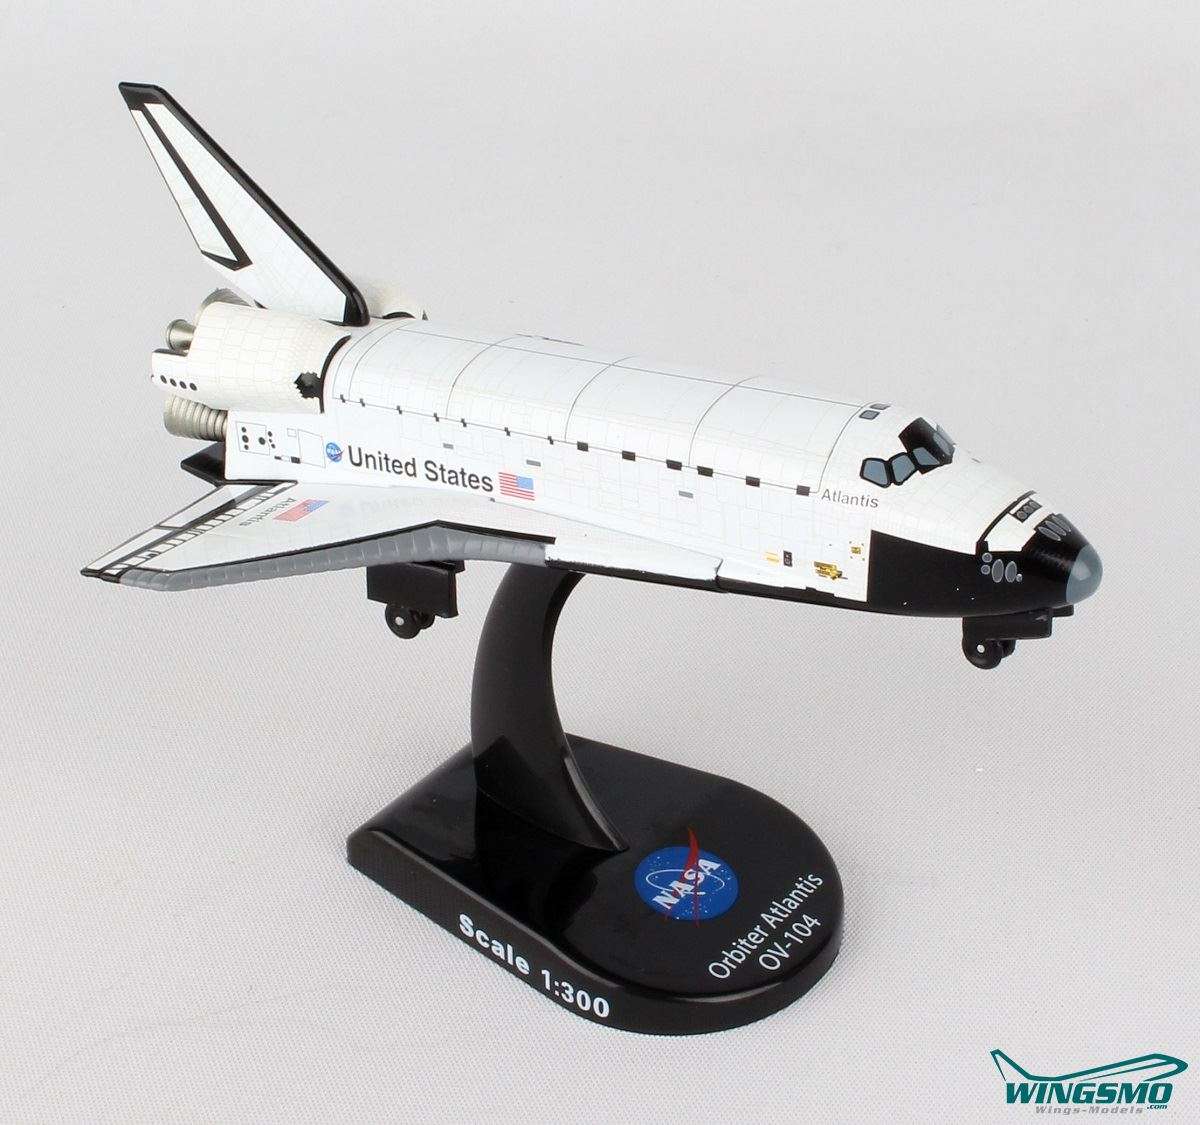 Postage Stamp NASA Space Shuttle Atlantis 1:300 PS5823-1